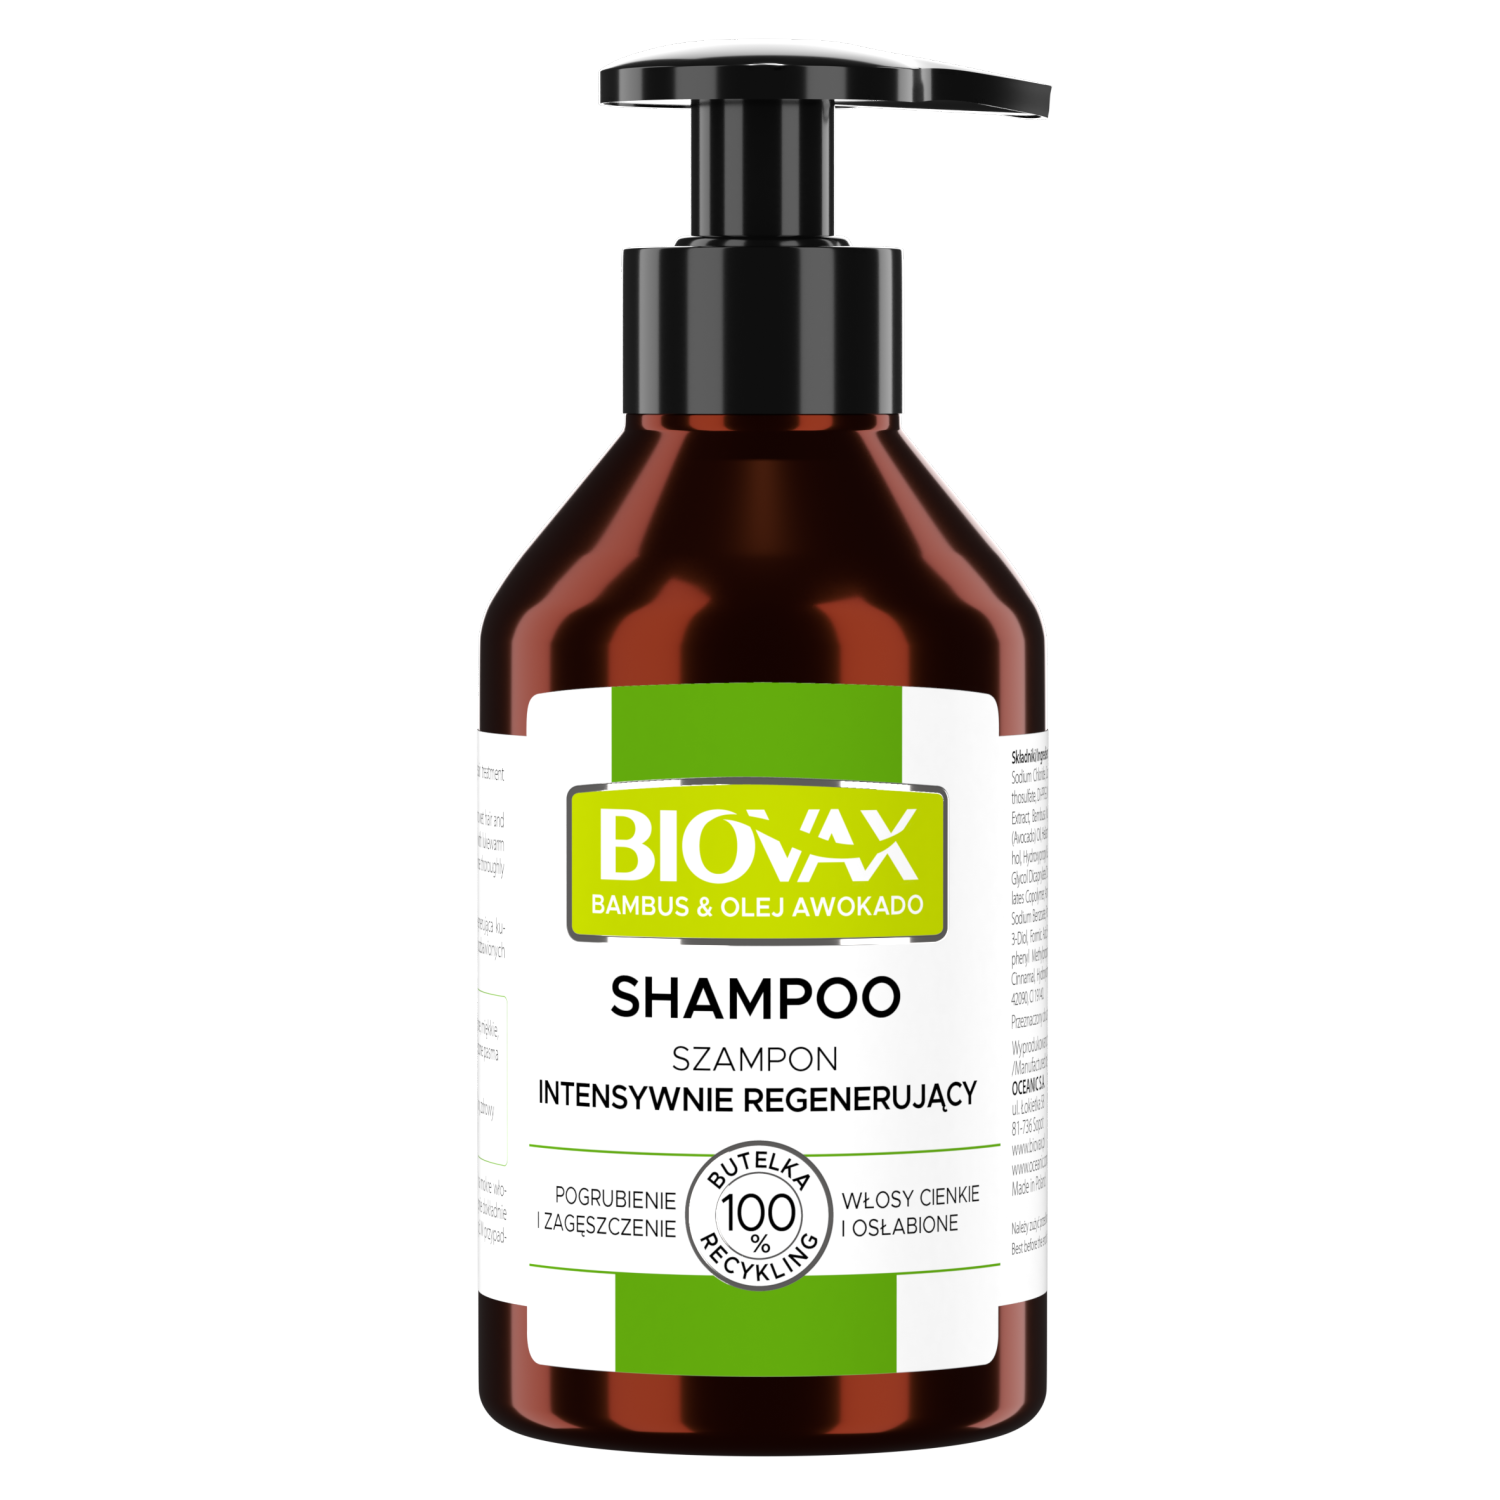 biovax szampon bambus opinie